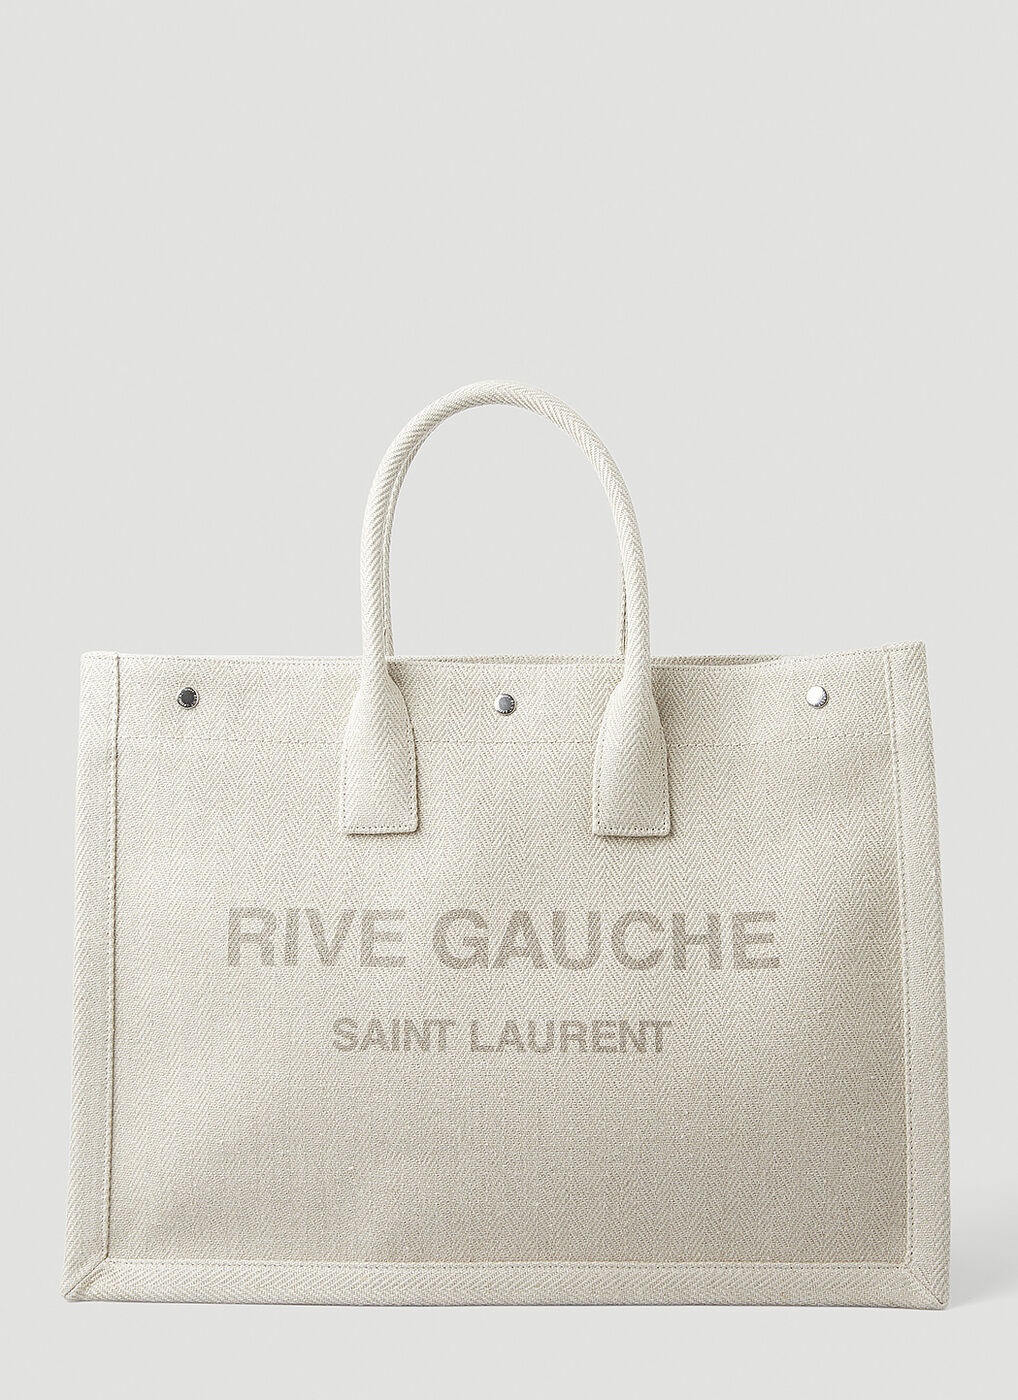 Saint Laurent Rive Gauche - Tote bag for Woman - Beige - 499290FAABR9054